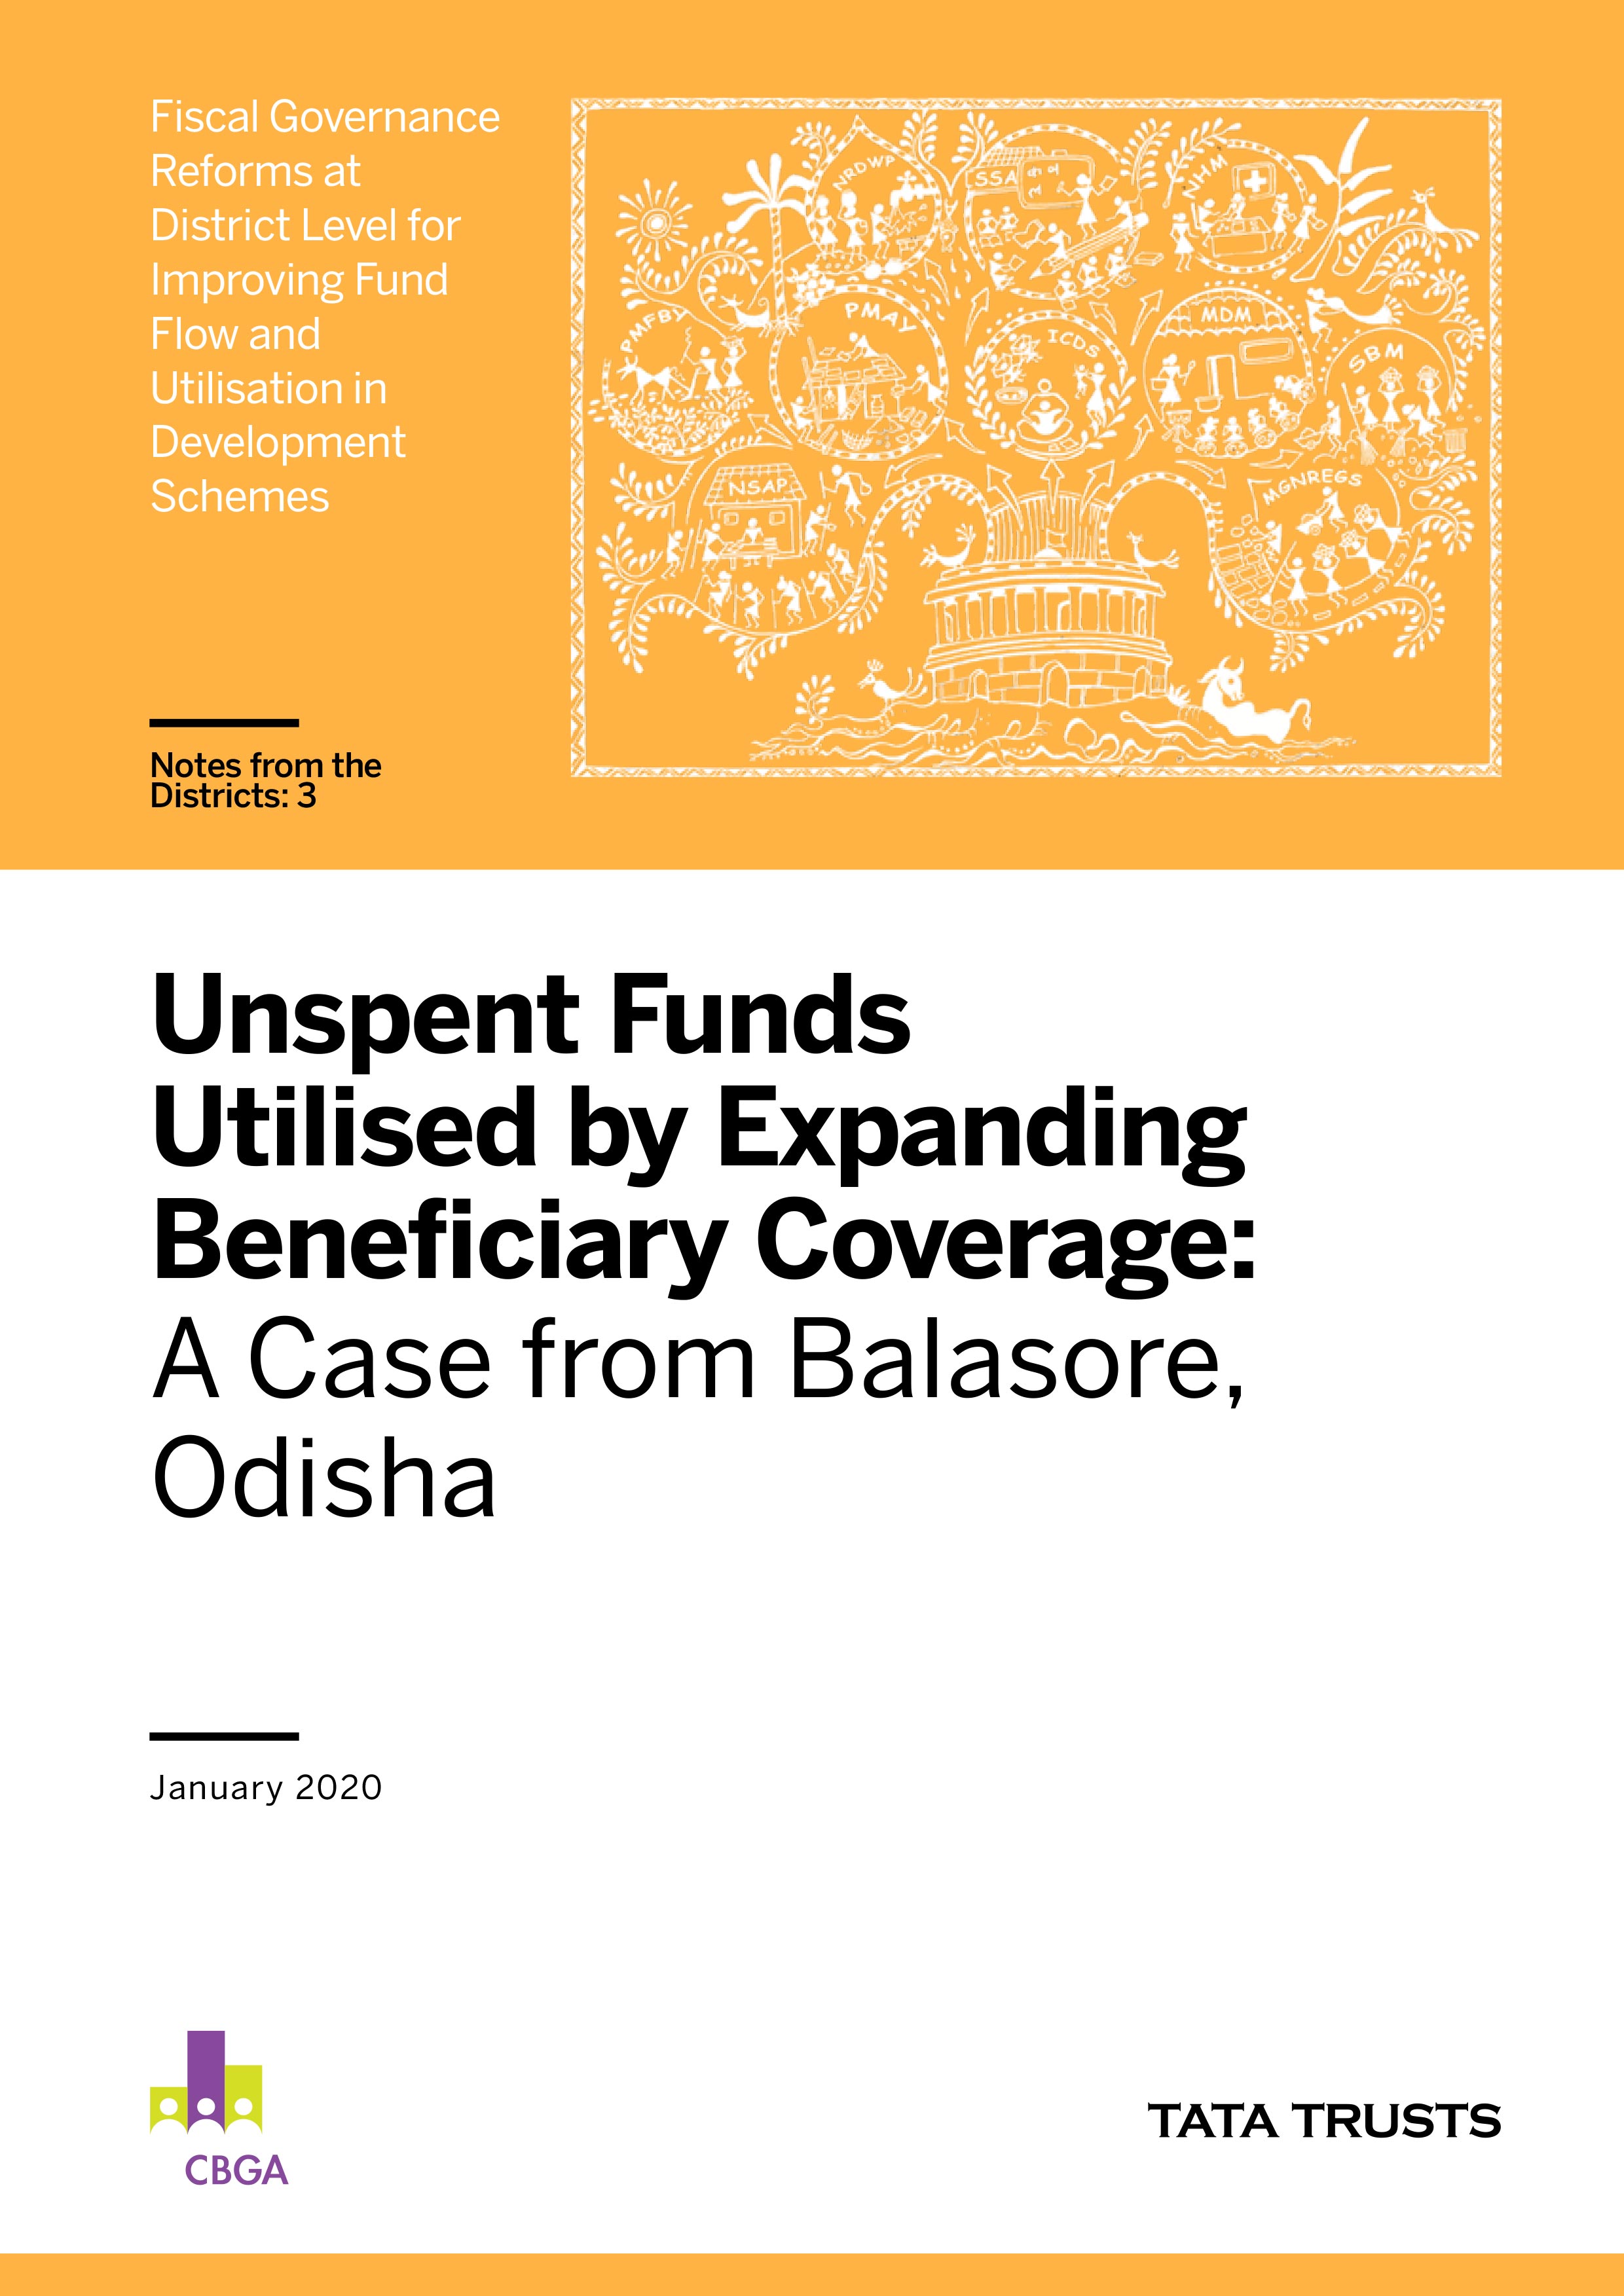 Inclusion in Beneficiary Coverage-Case of Balasore